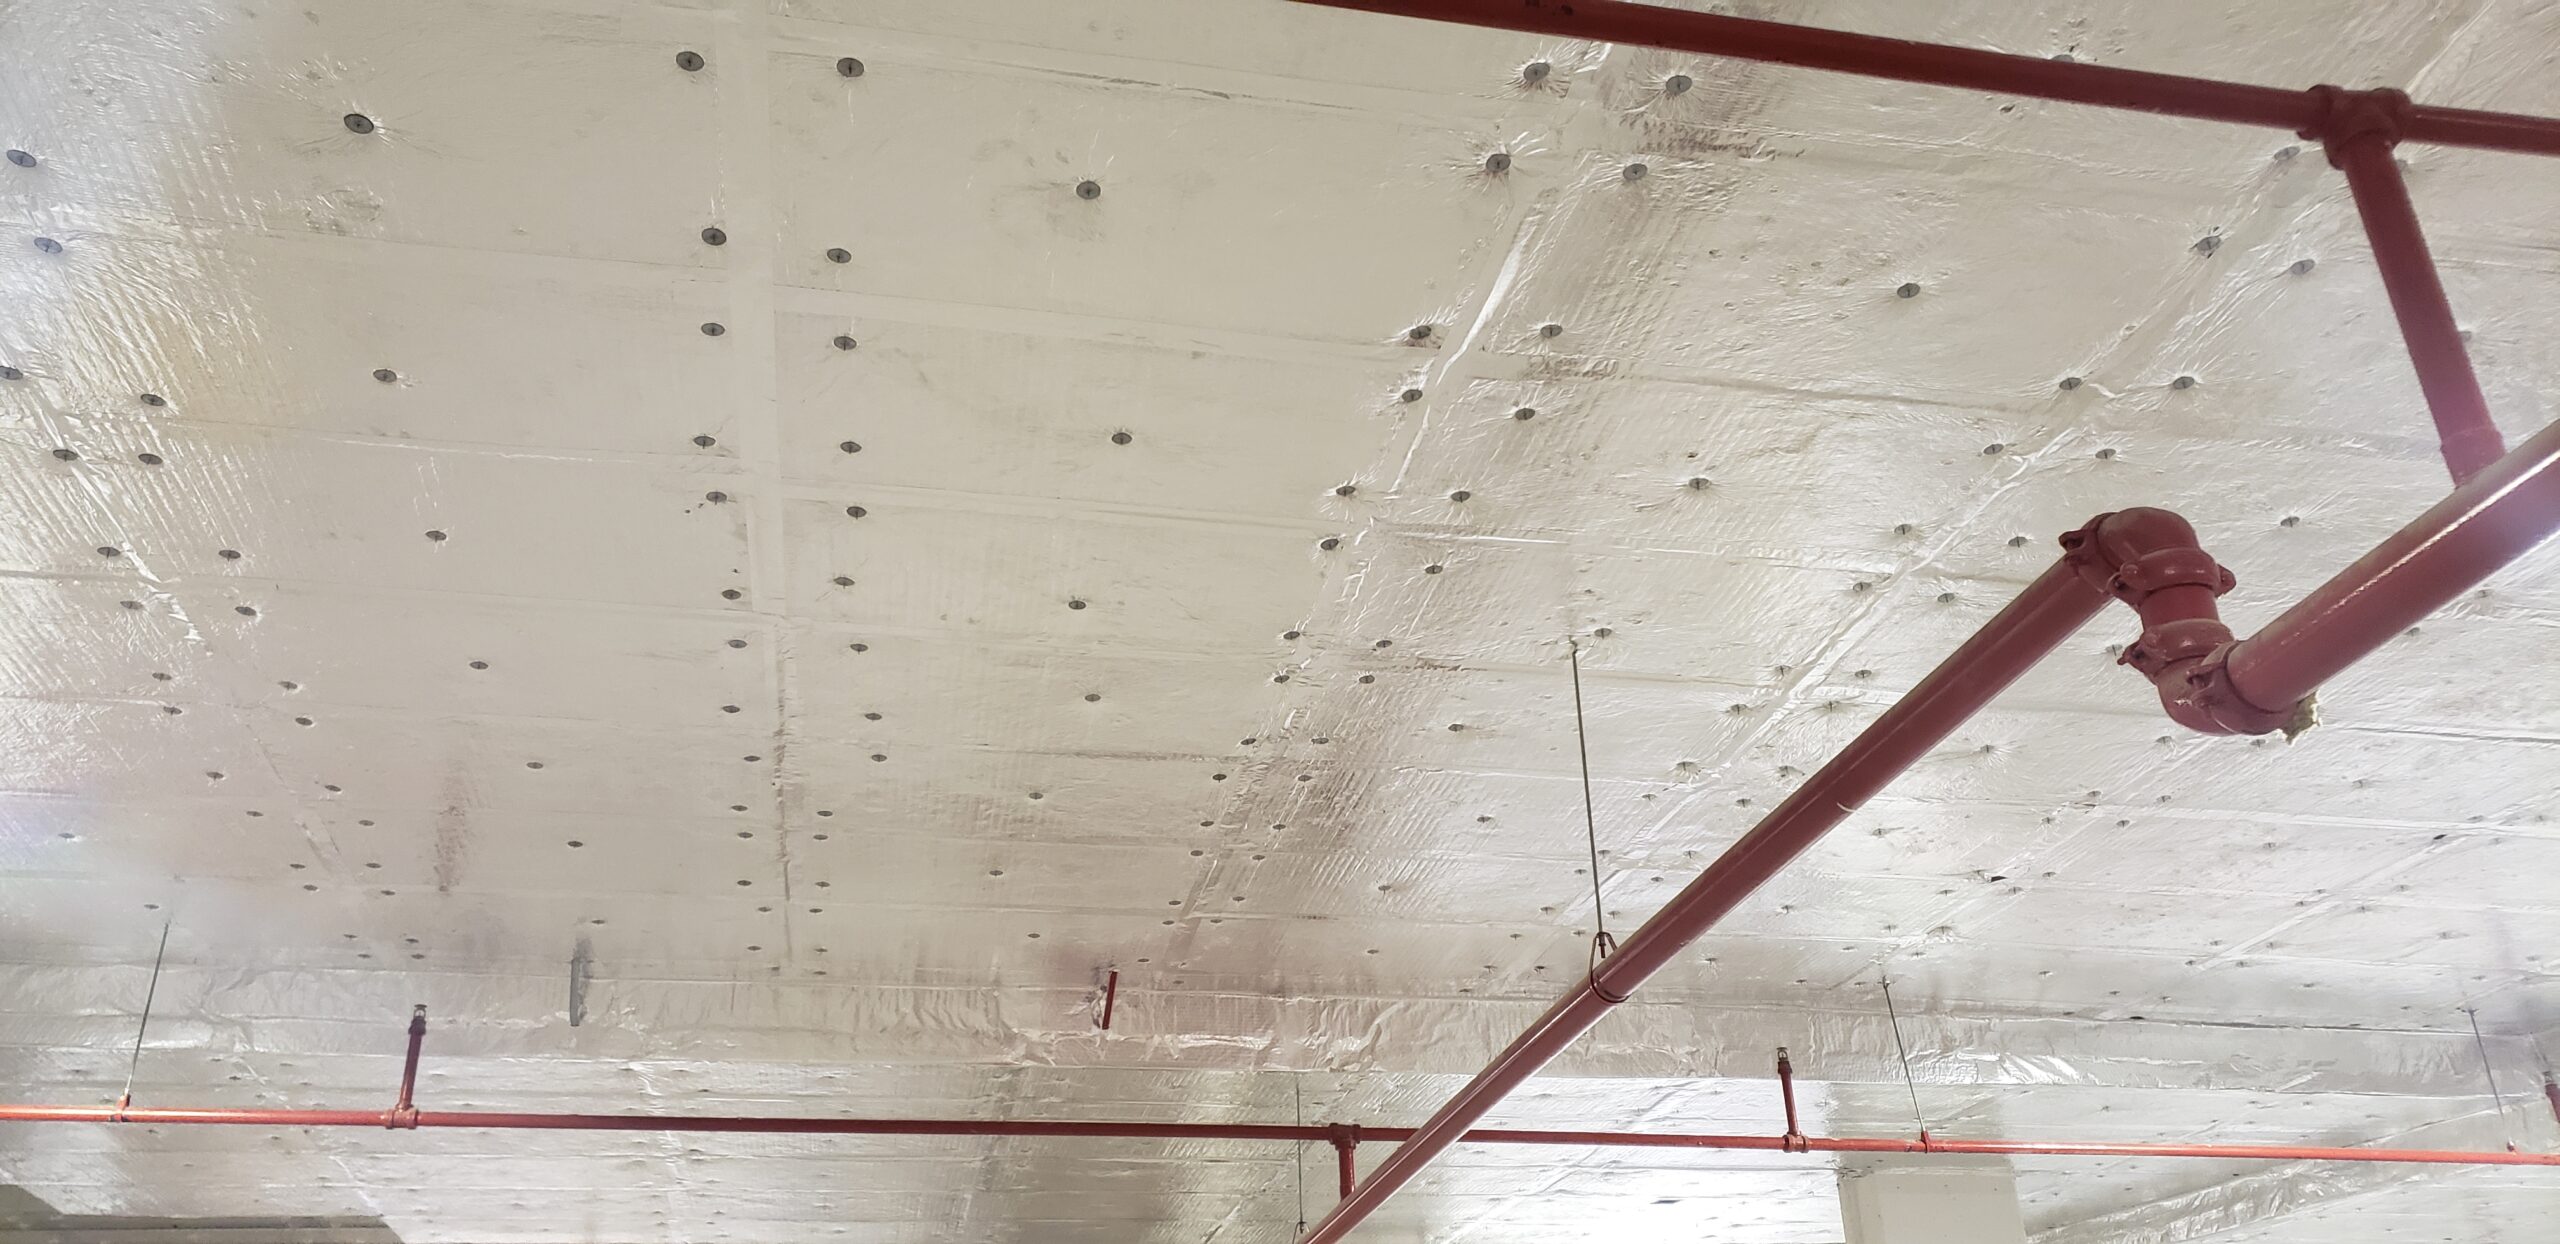 Parking garage ceiling insulated with rigid foam board.